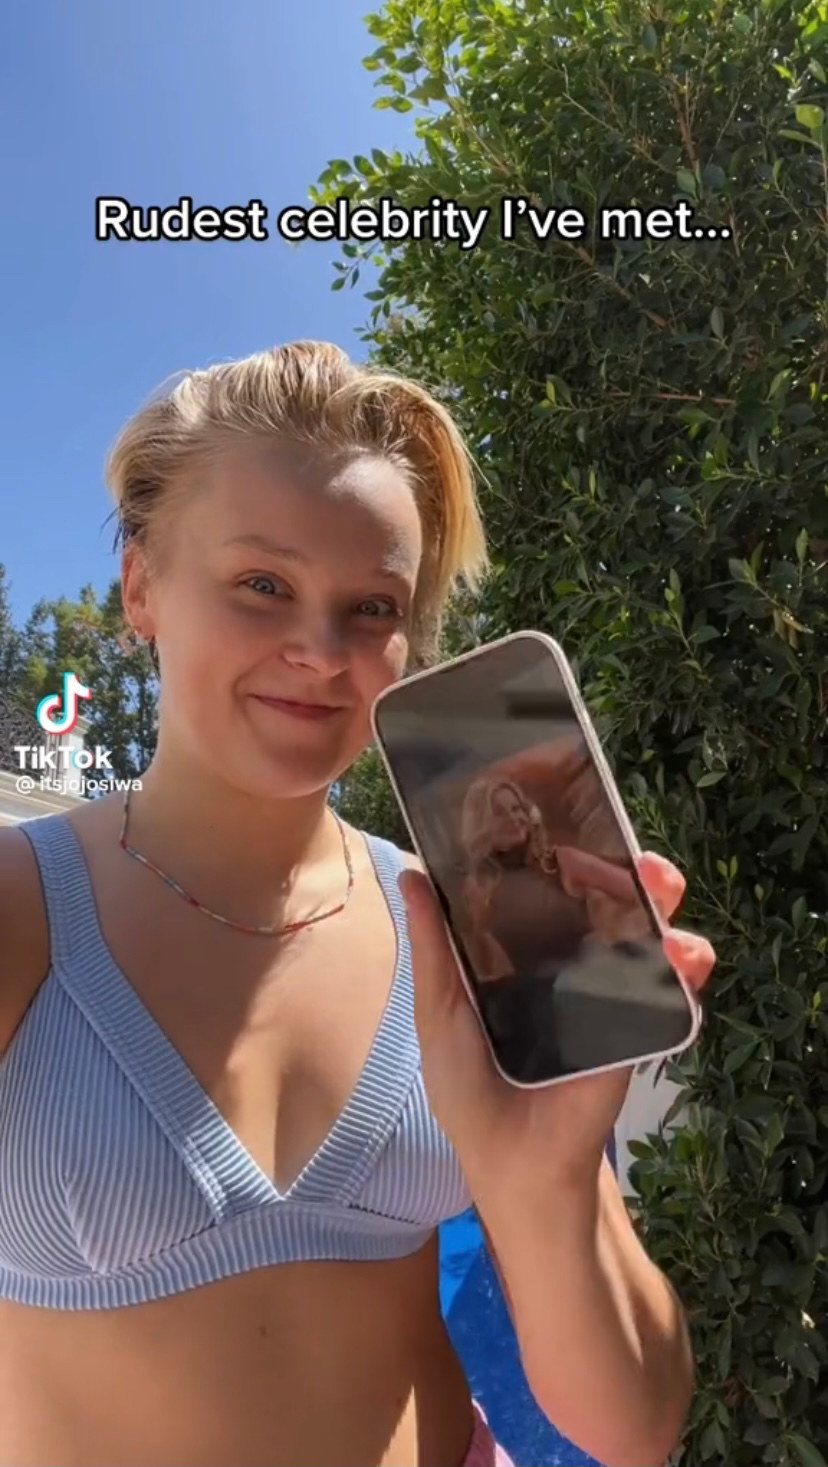 JoJo wears a blue bikini and holds up her phone with a photo of Candace Cameron Bure